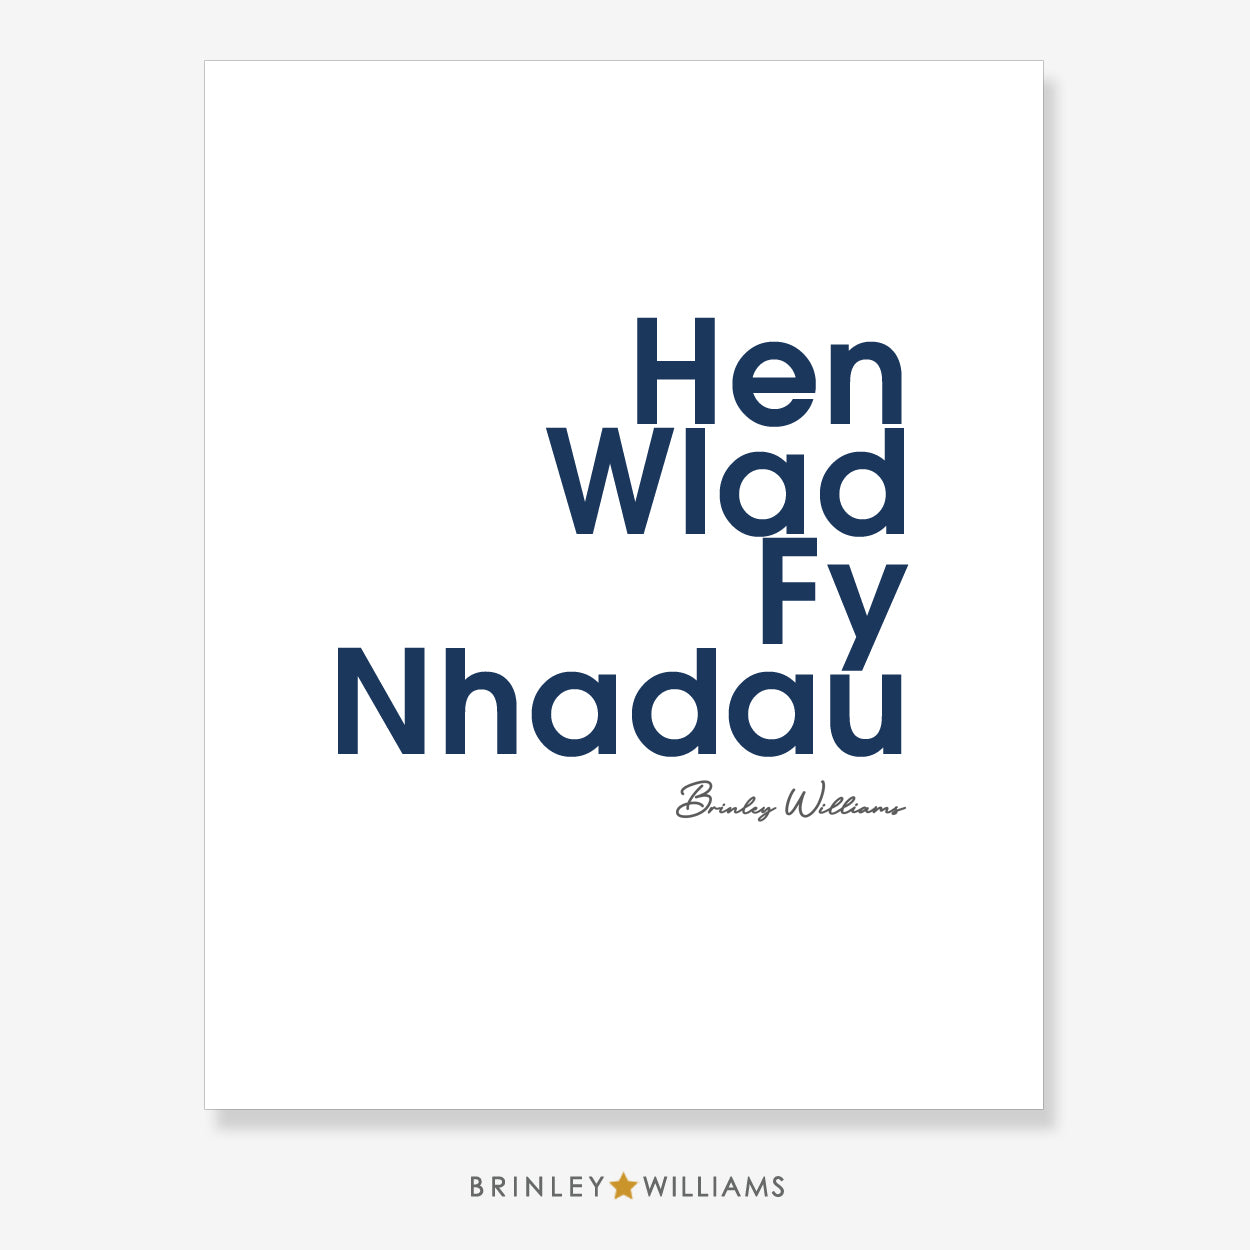 Hen Wlad Fy Nhadau Wall Art Poster - Navy